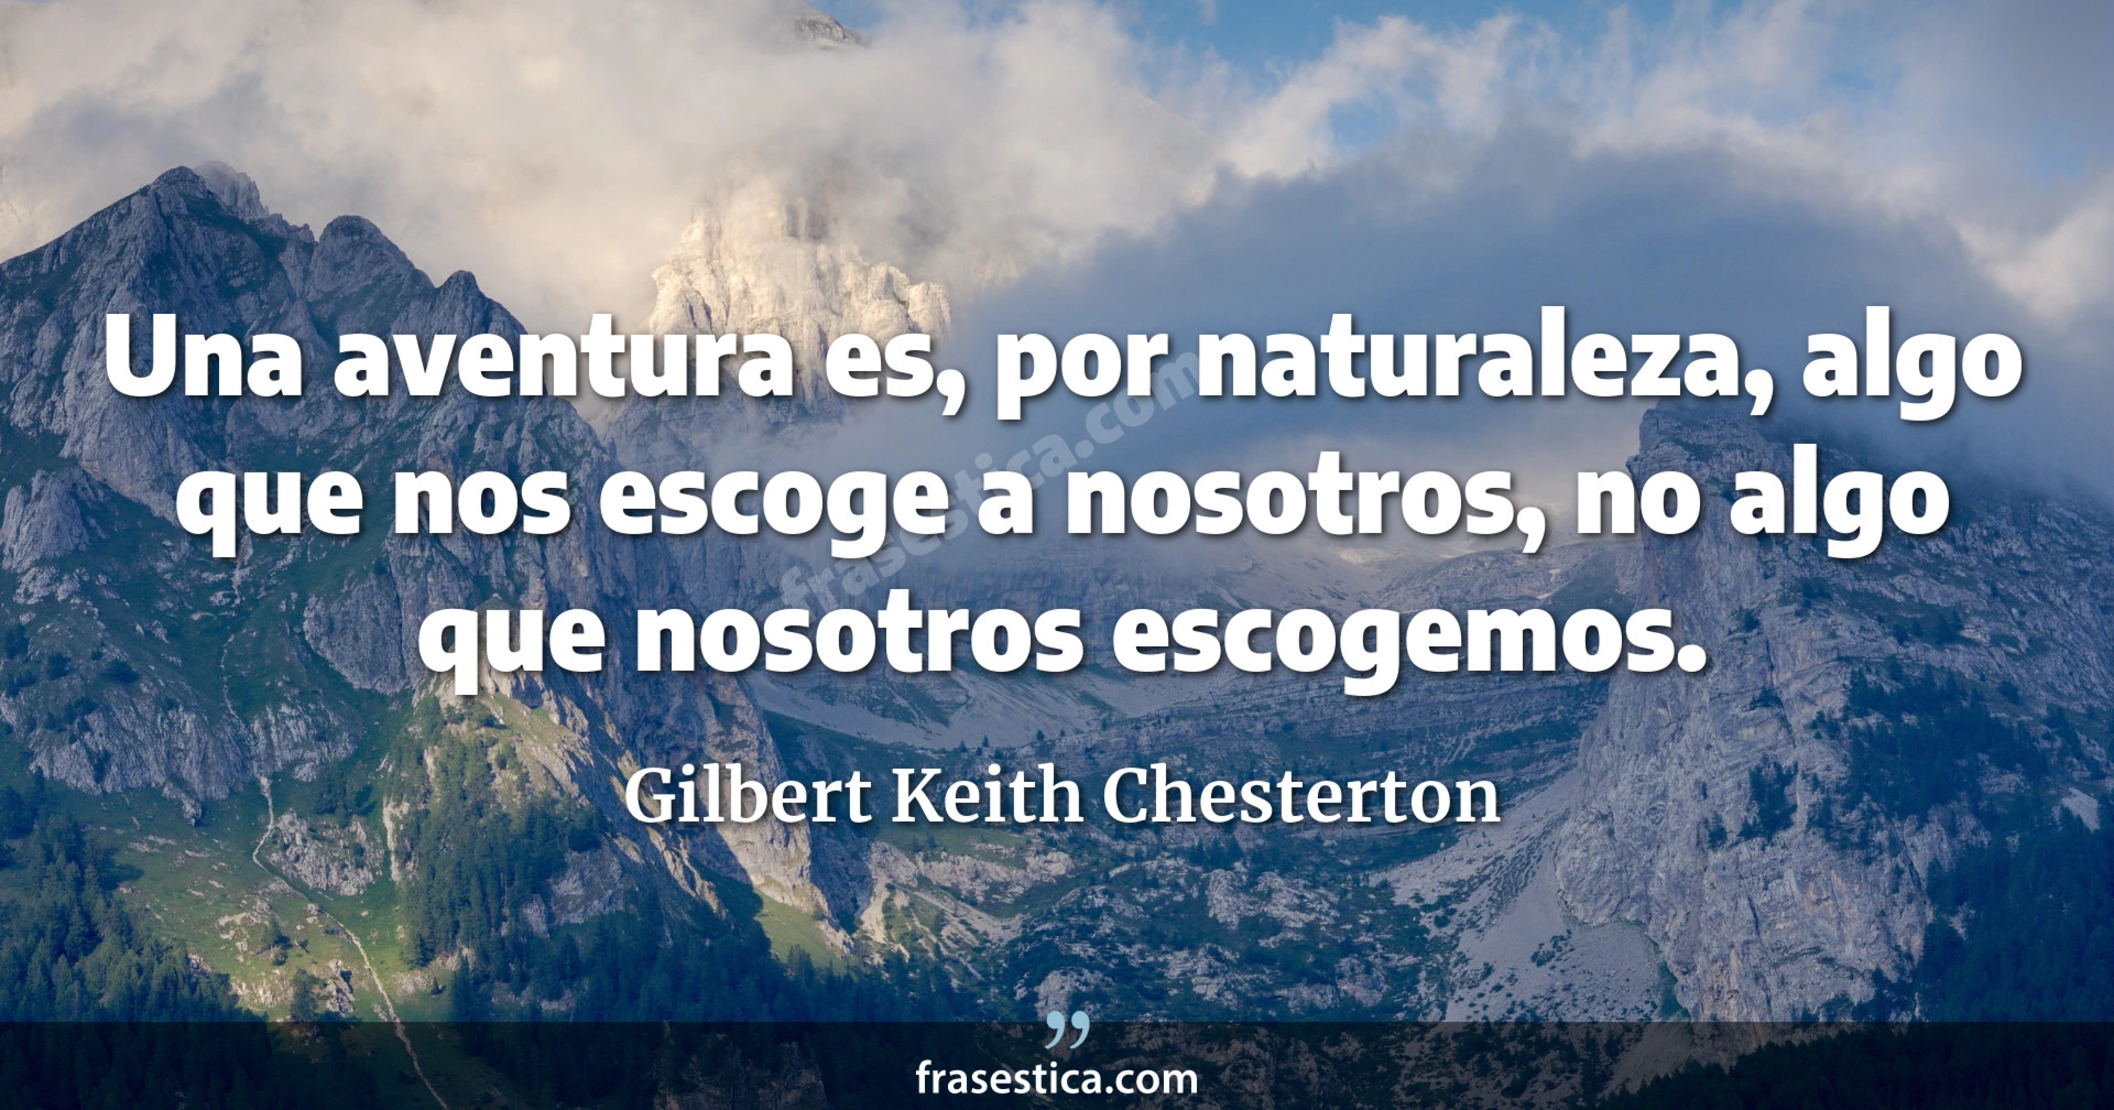 Una aventura es, por naturaleza, algo que nos escoge a nosotros, no algo que nosotros escogemos. - Gilbert Keith Chesterton